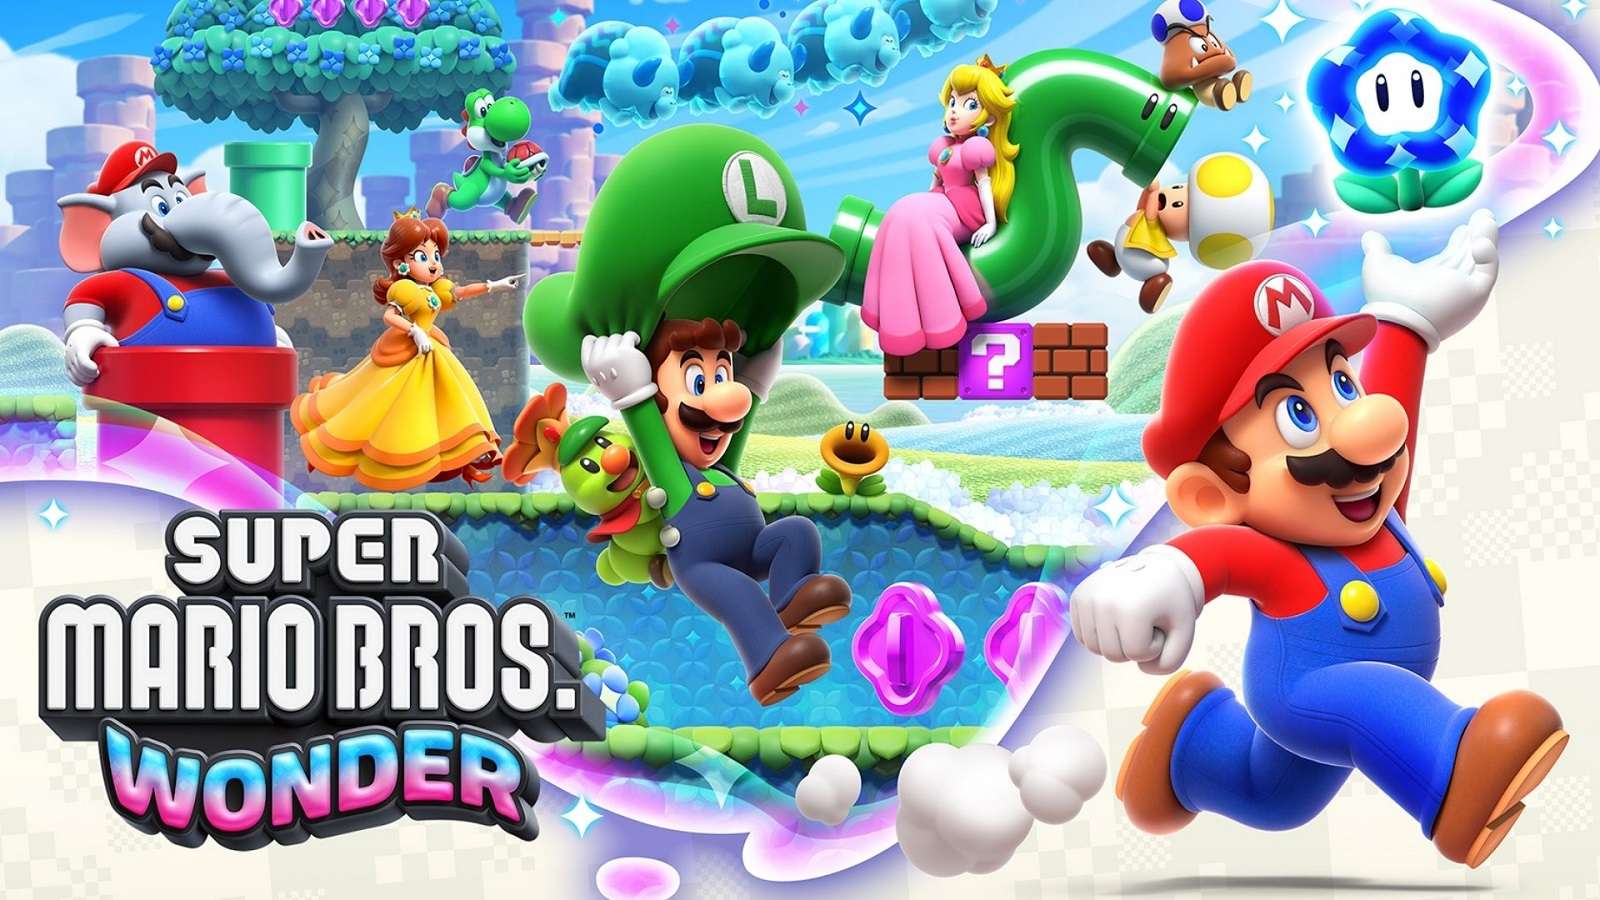 Super Mario Bros. Wonder characters